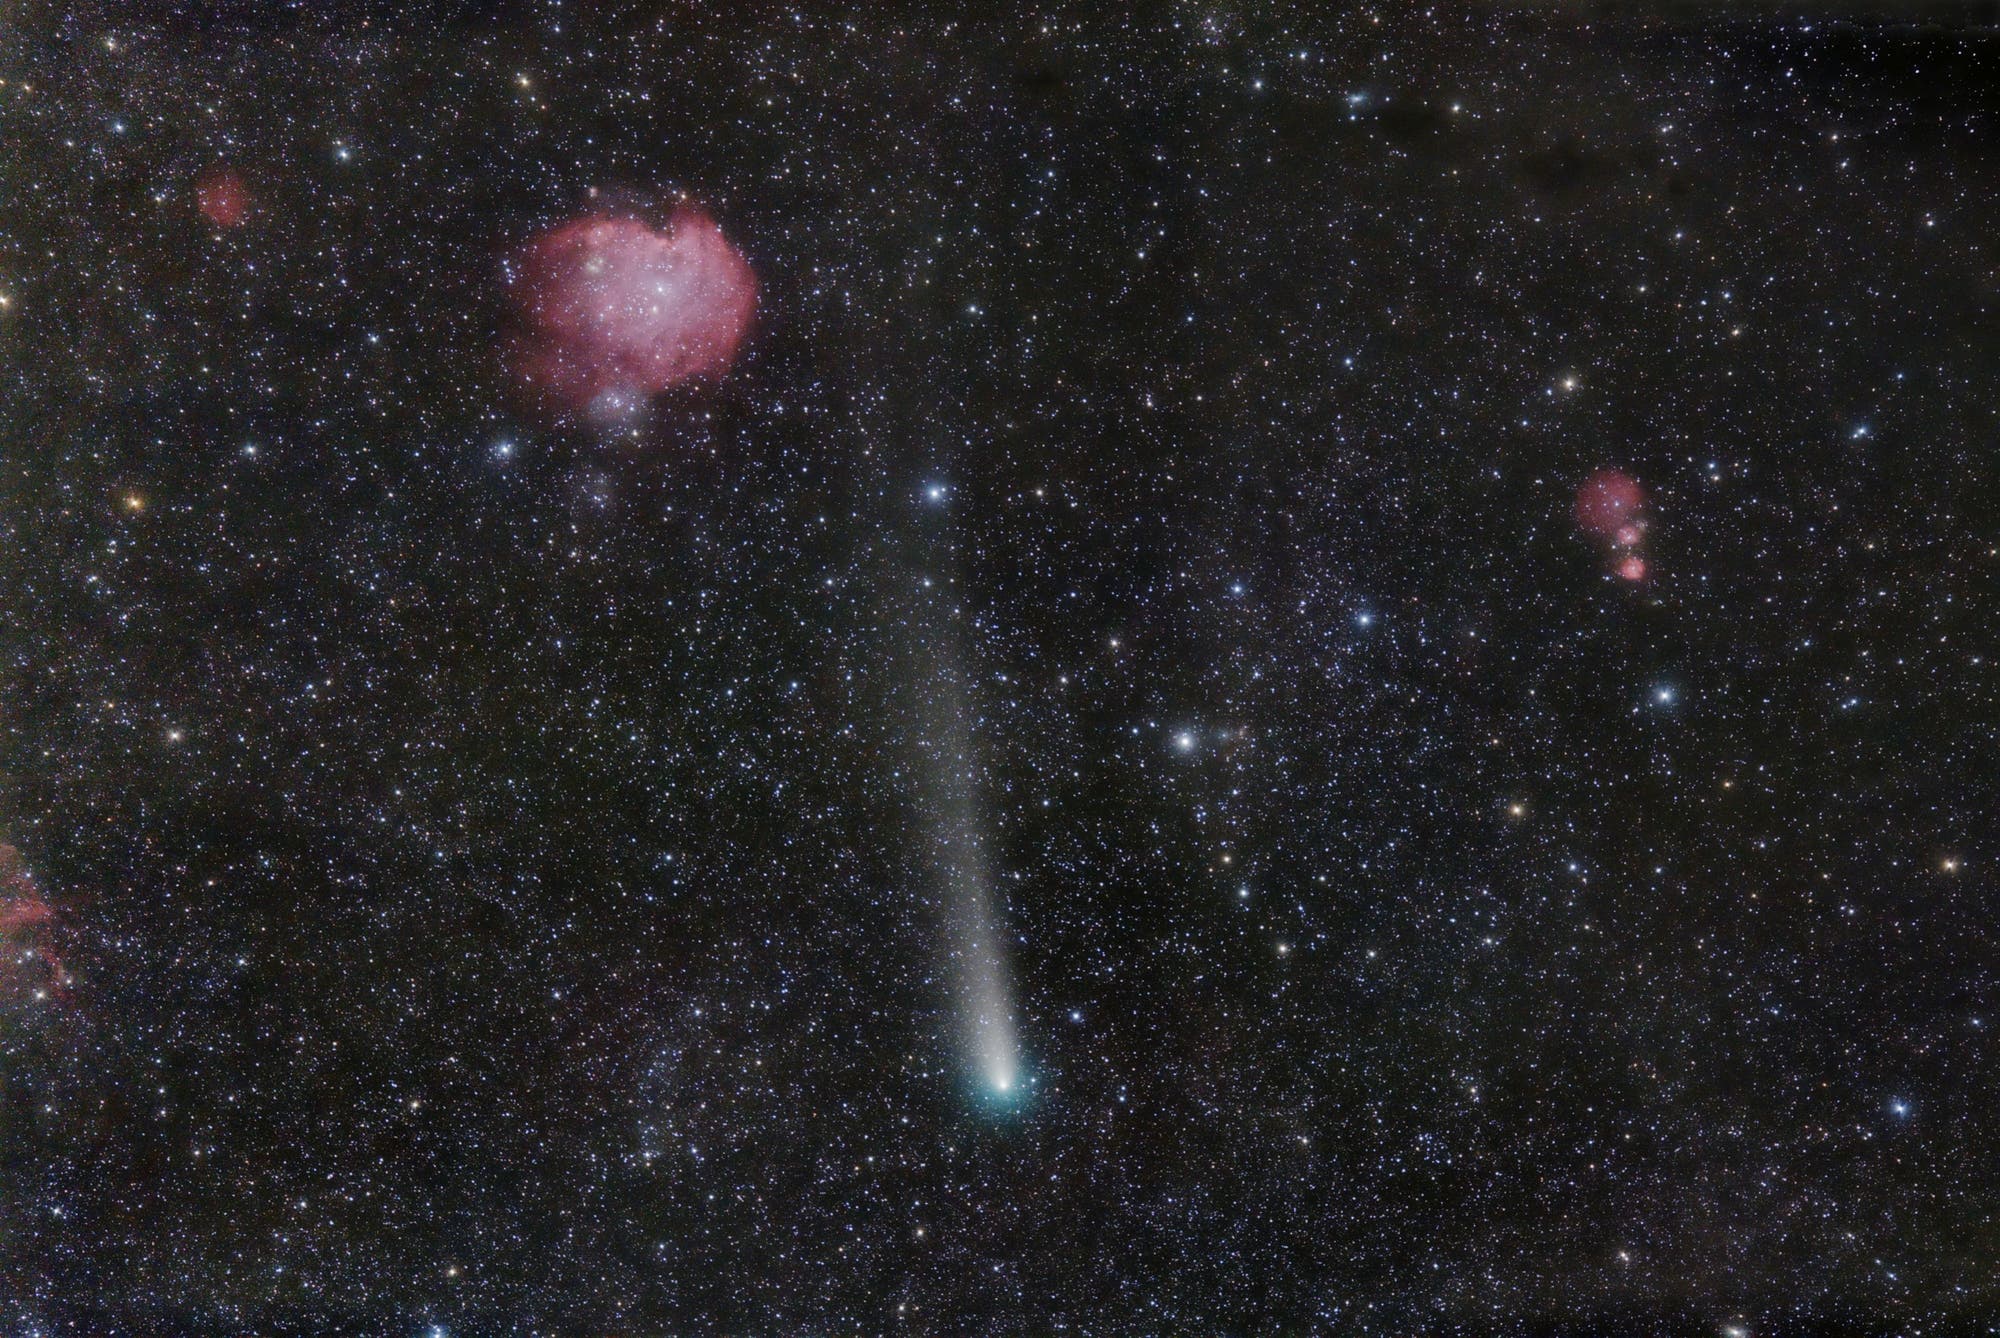 Comet 21P/Giacobini-Zinner and Monkey Head Nebula